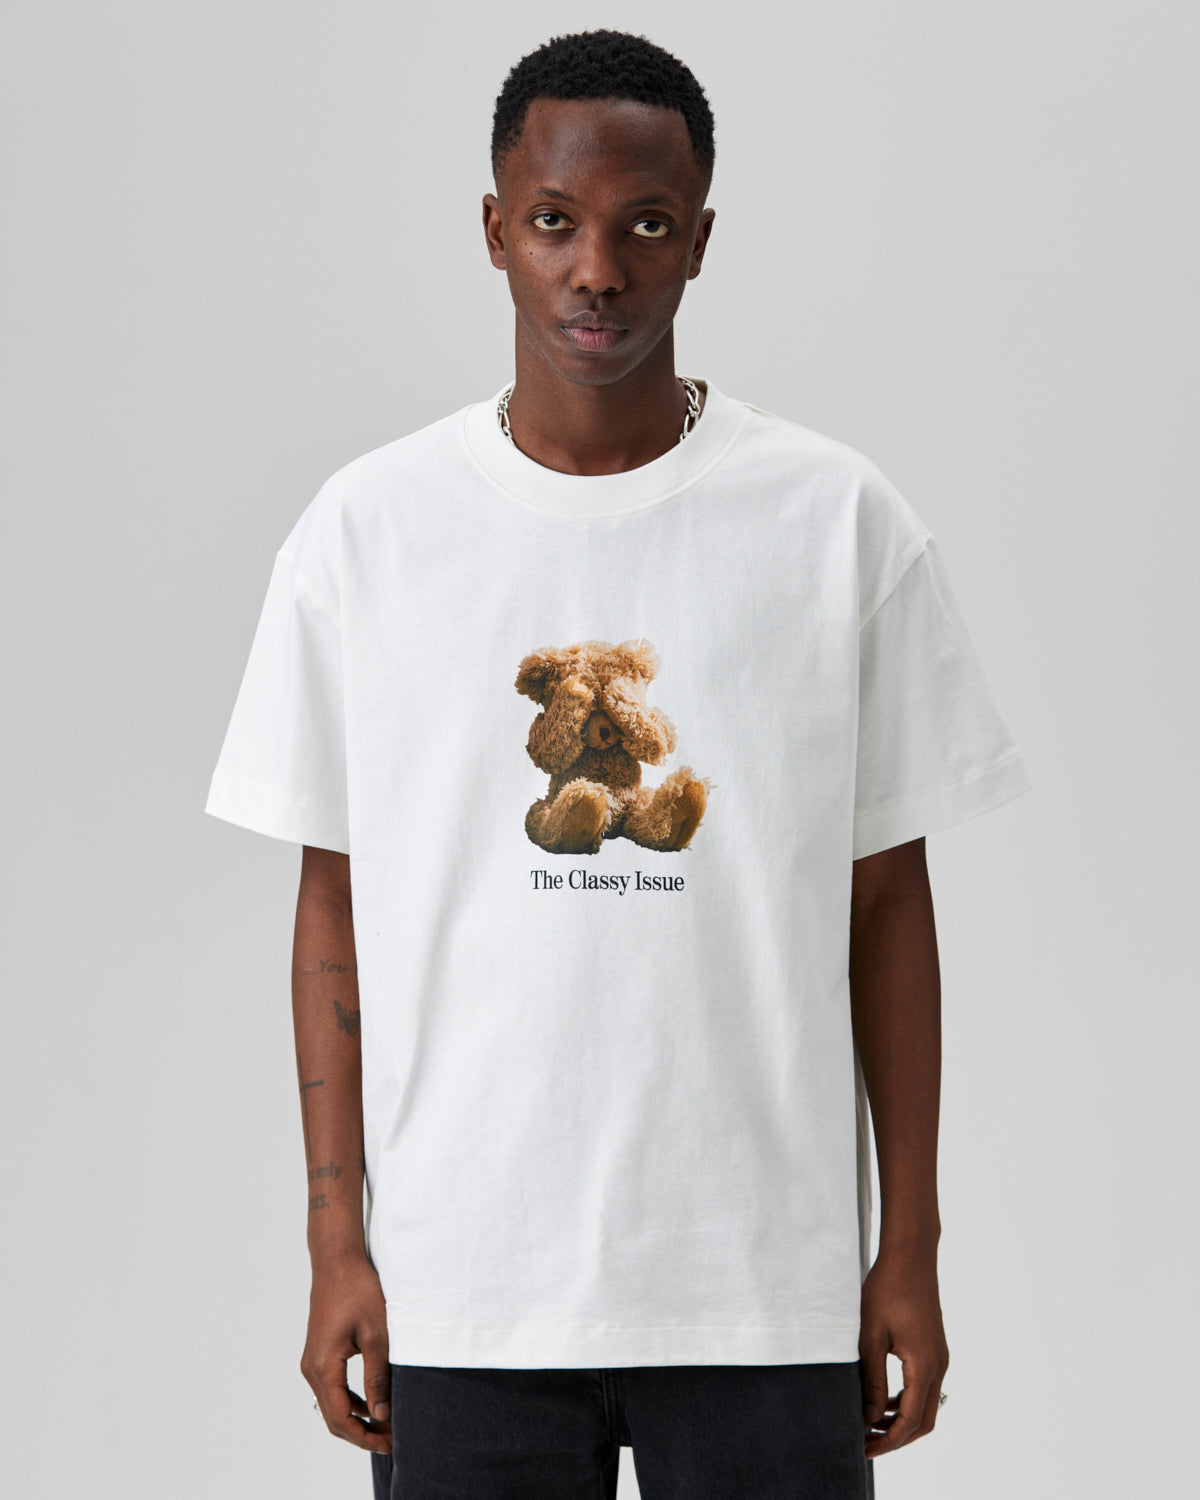 Bear T-shirt